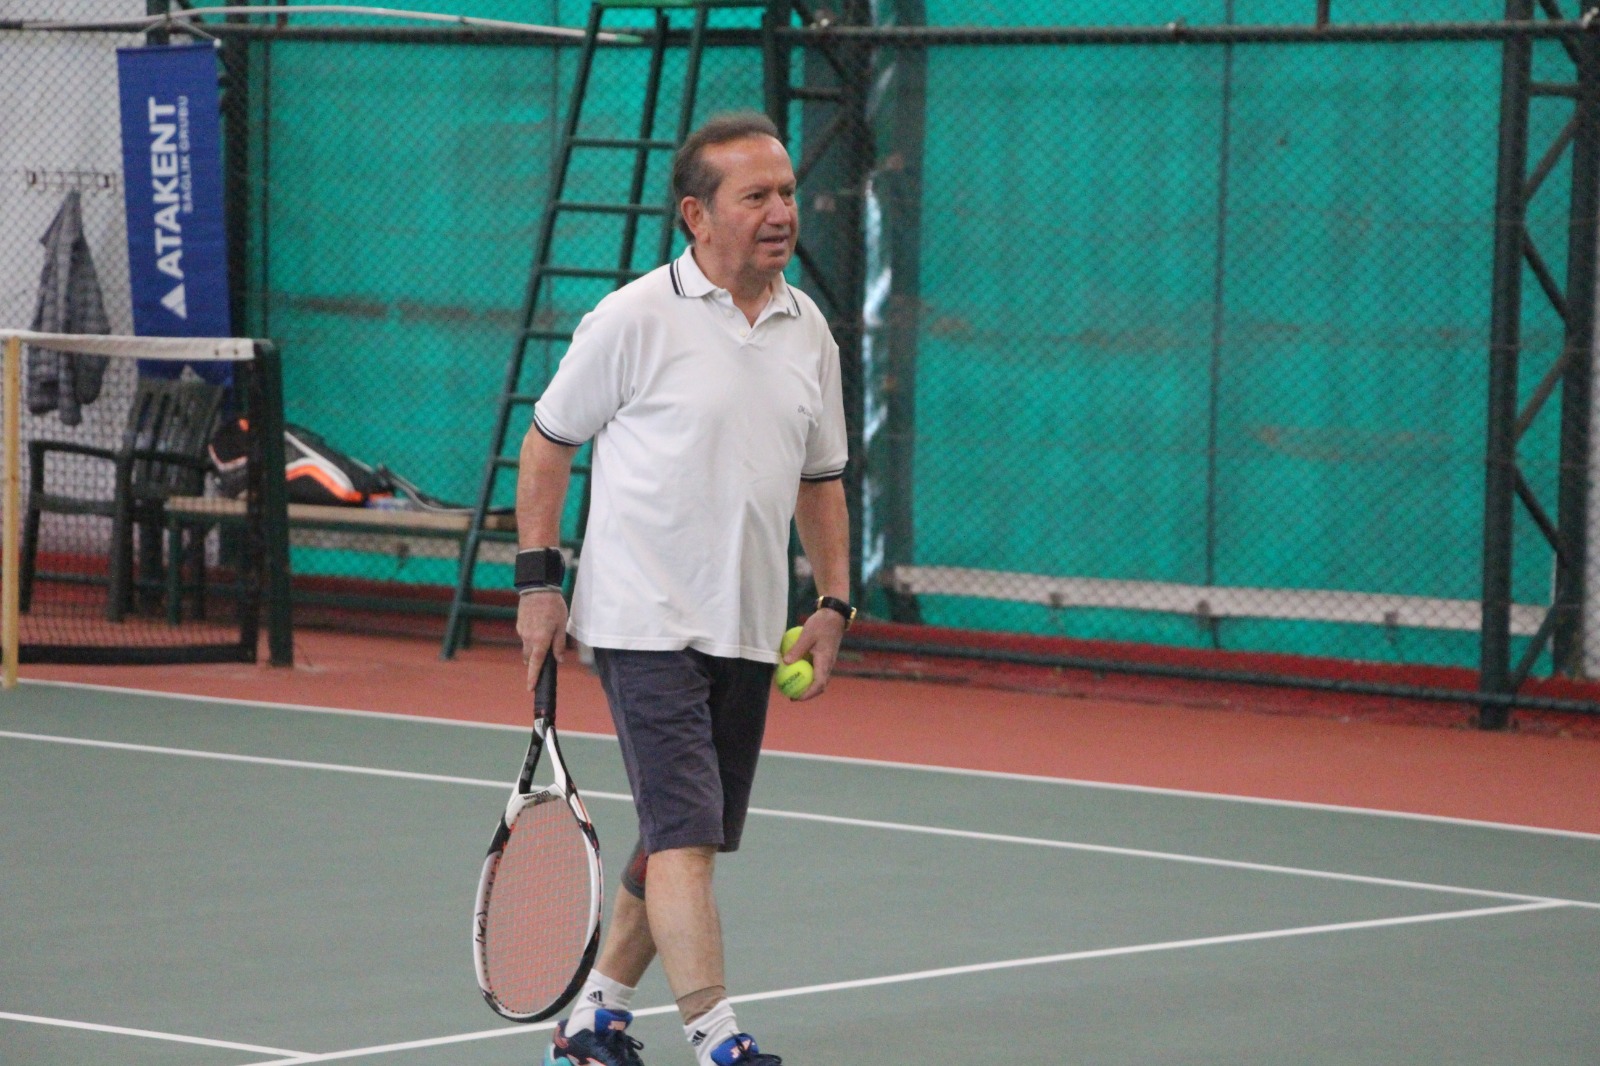 Yalova Tenis Spor Haber Gazete Manset Baskan Roportaj (4)